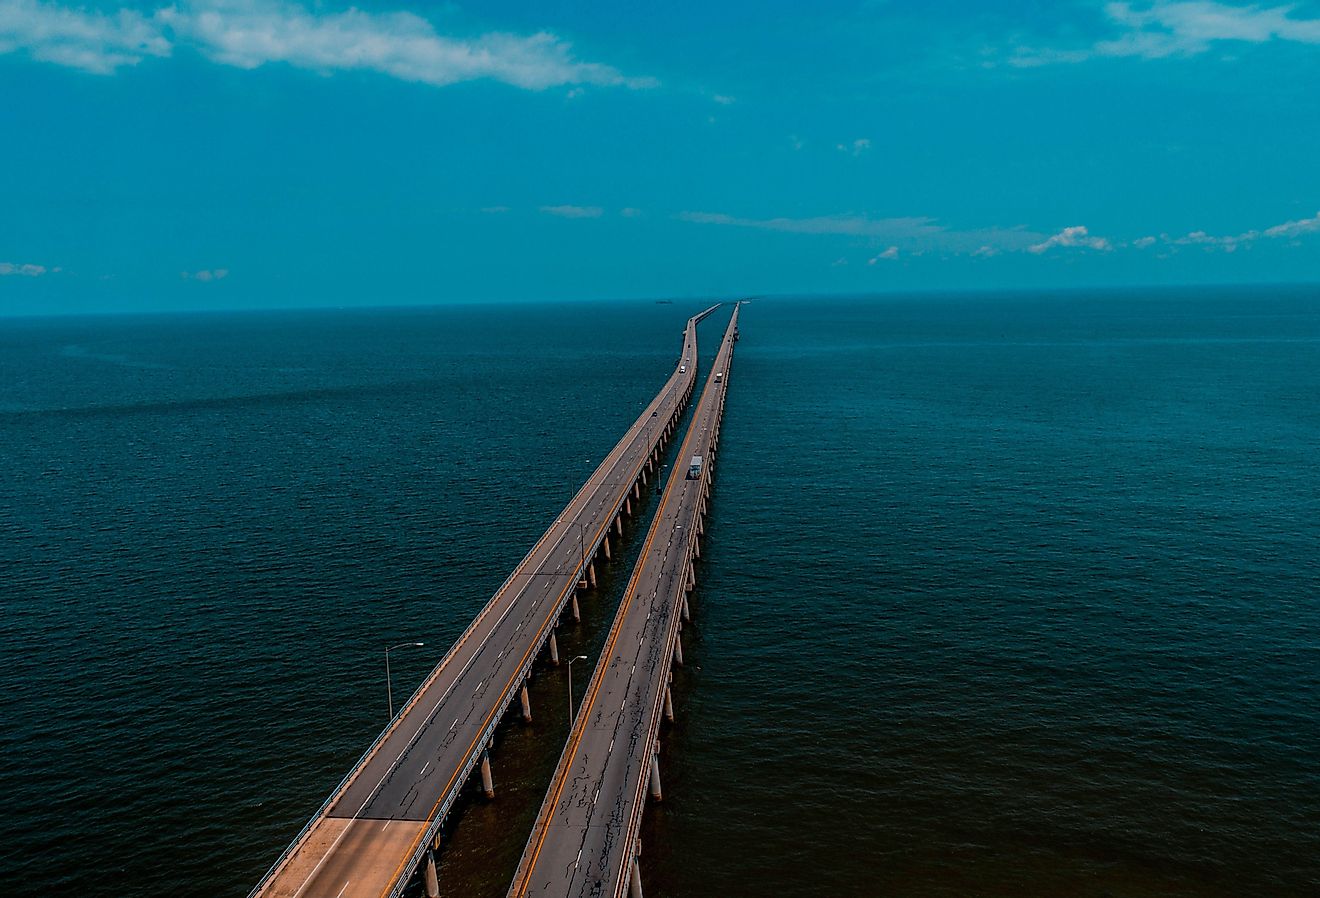 Aerial view of the Chesapeake Bay Bridge tunnel. Image credit Main Focus Media via Shutterstock.